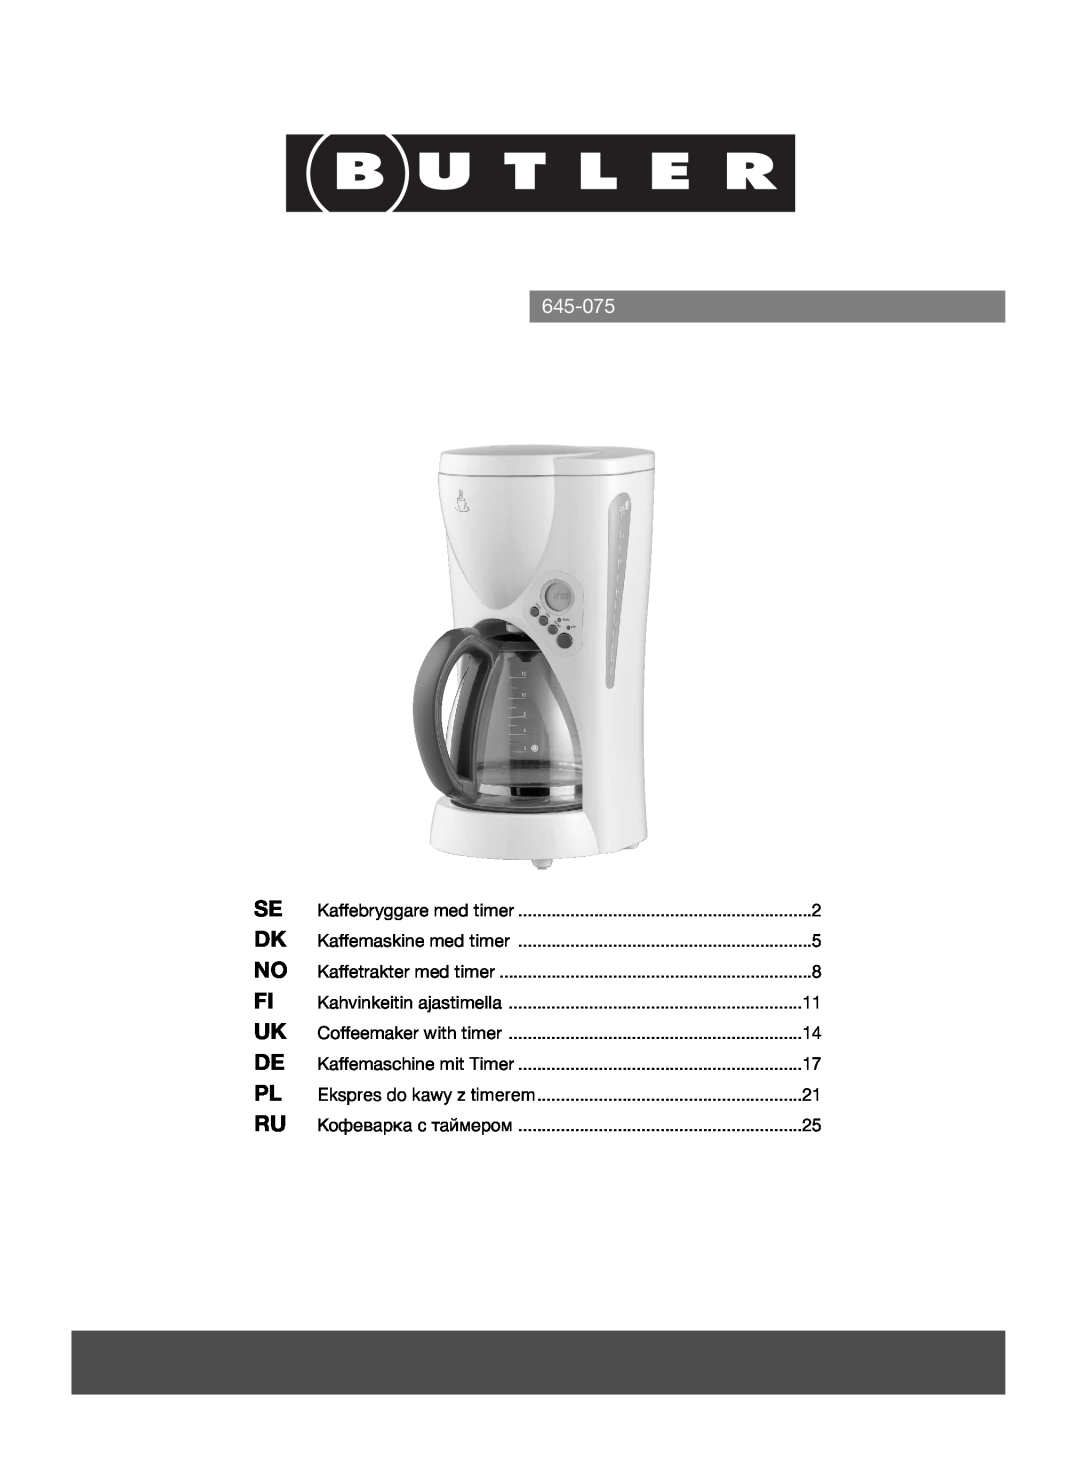 Melissa 645-075 manual Kahvinkeitin ajastimella, Coffeemaker with timer, Kaffemaschine mit Timer, Кофеварка с таймером 